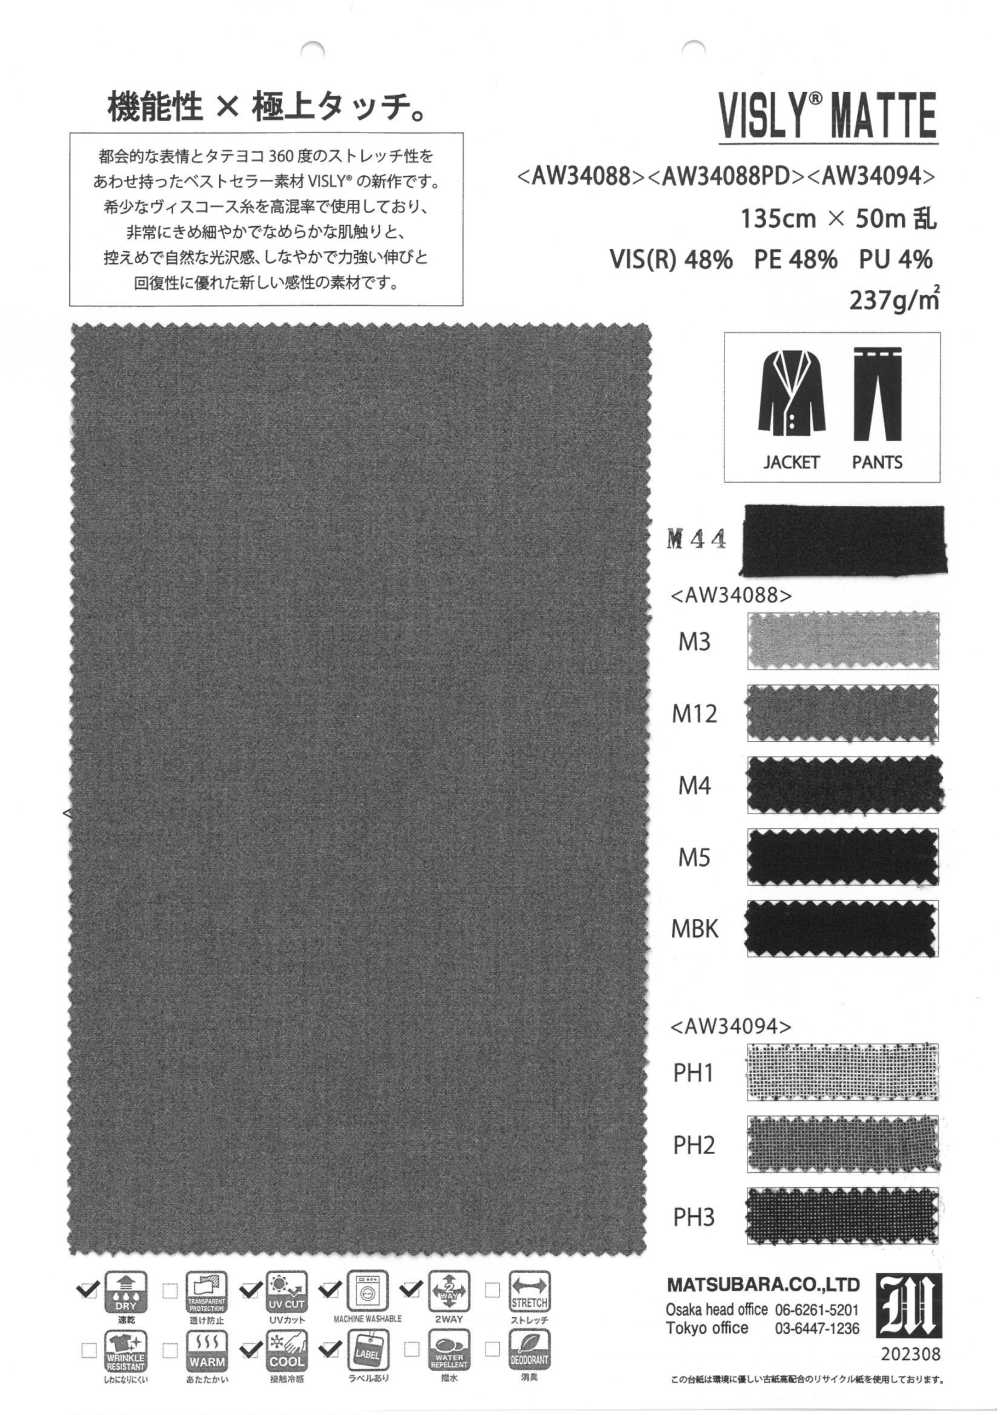 AW34088PD Bisley Mat[Fabrica Textil] Matsubara